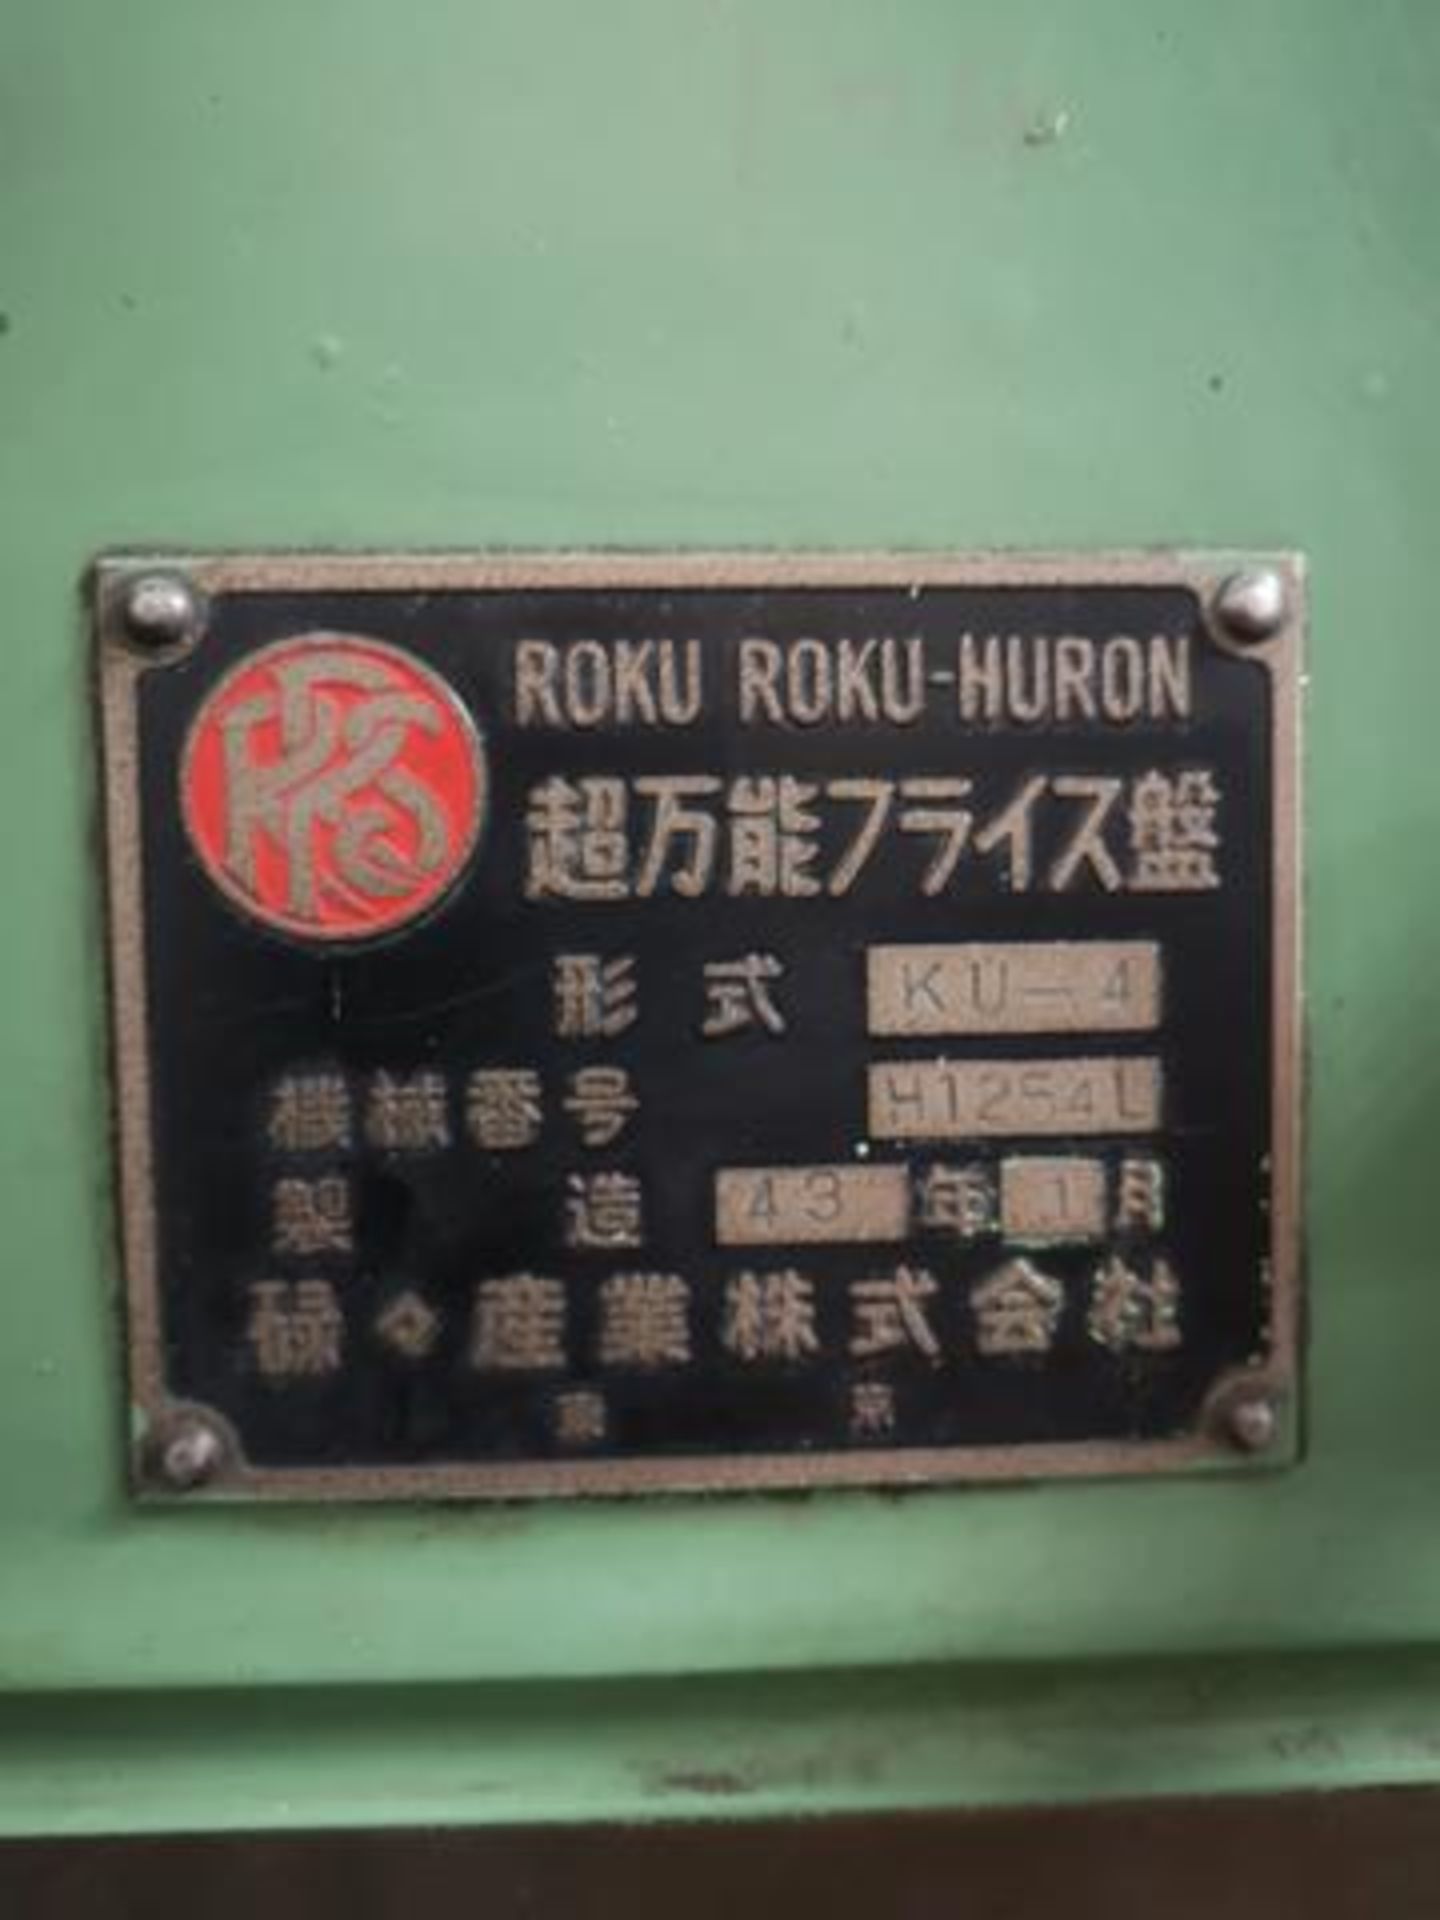 HURON ROKU ROKU, KU-4, 20" X 60" HORIZONTAL MILL, 5 HP, ISO 50 TAPER SPINDLE, GEARBOX DRIVEN HEAD, - Image 5 of 5